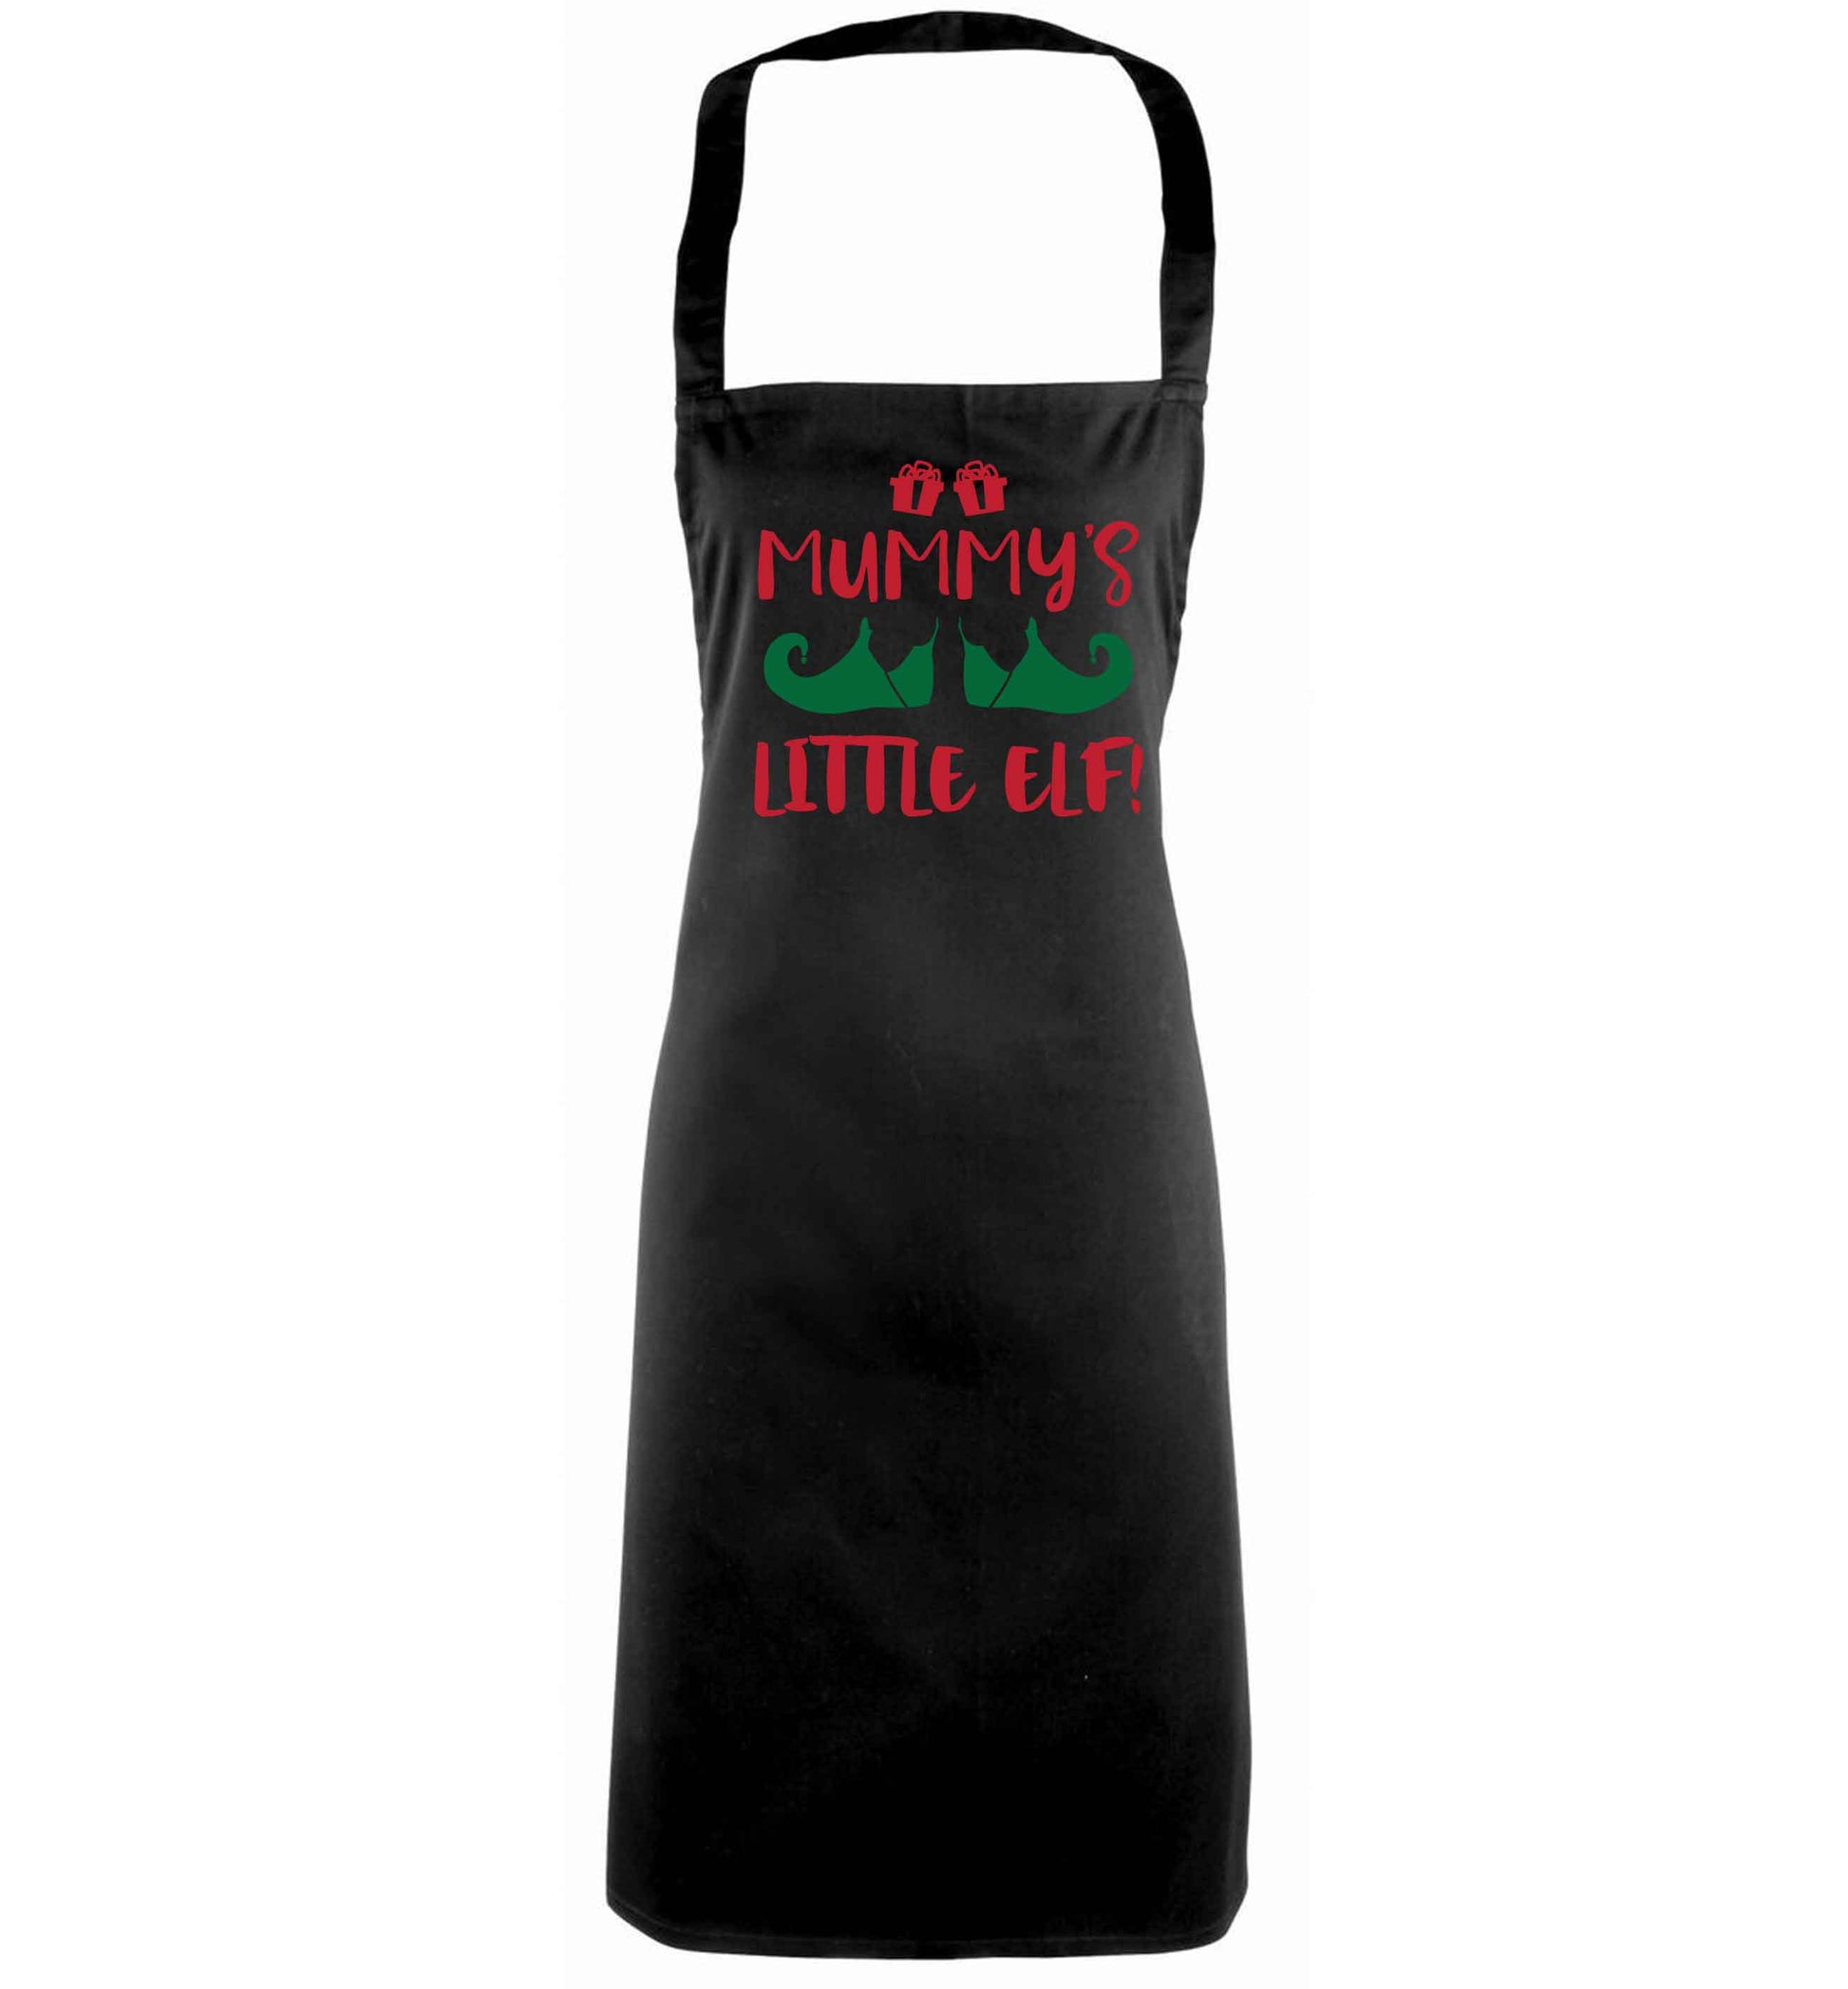 Mummy's little elf black apron